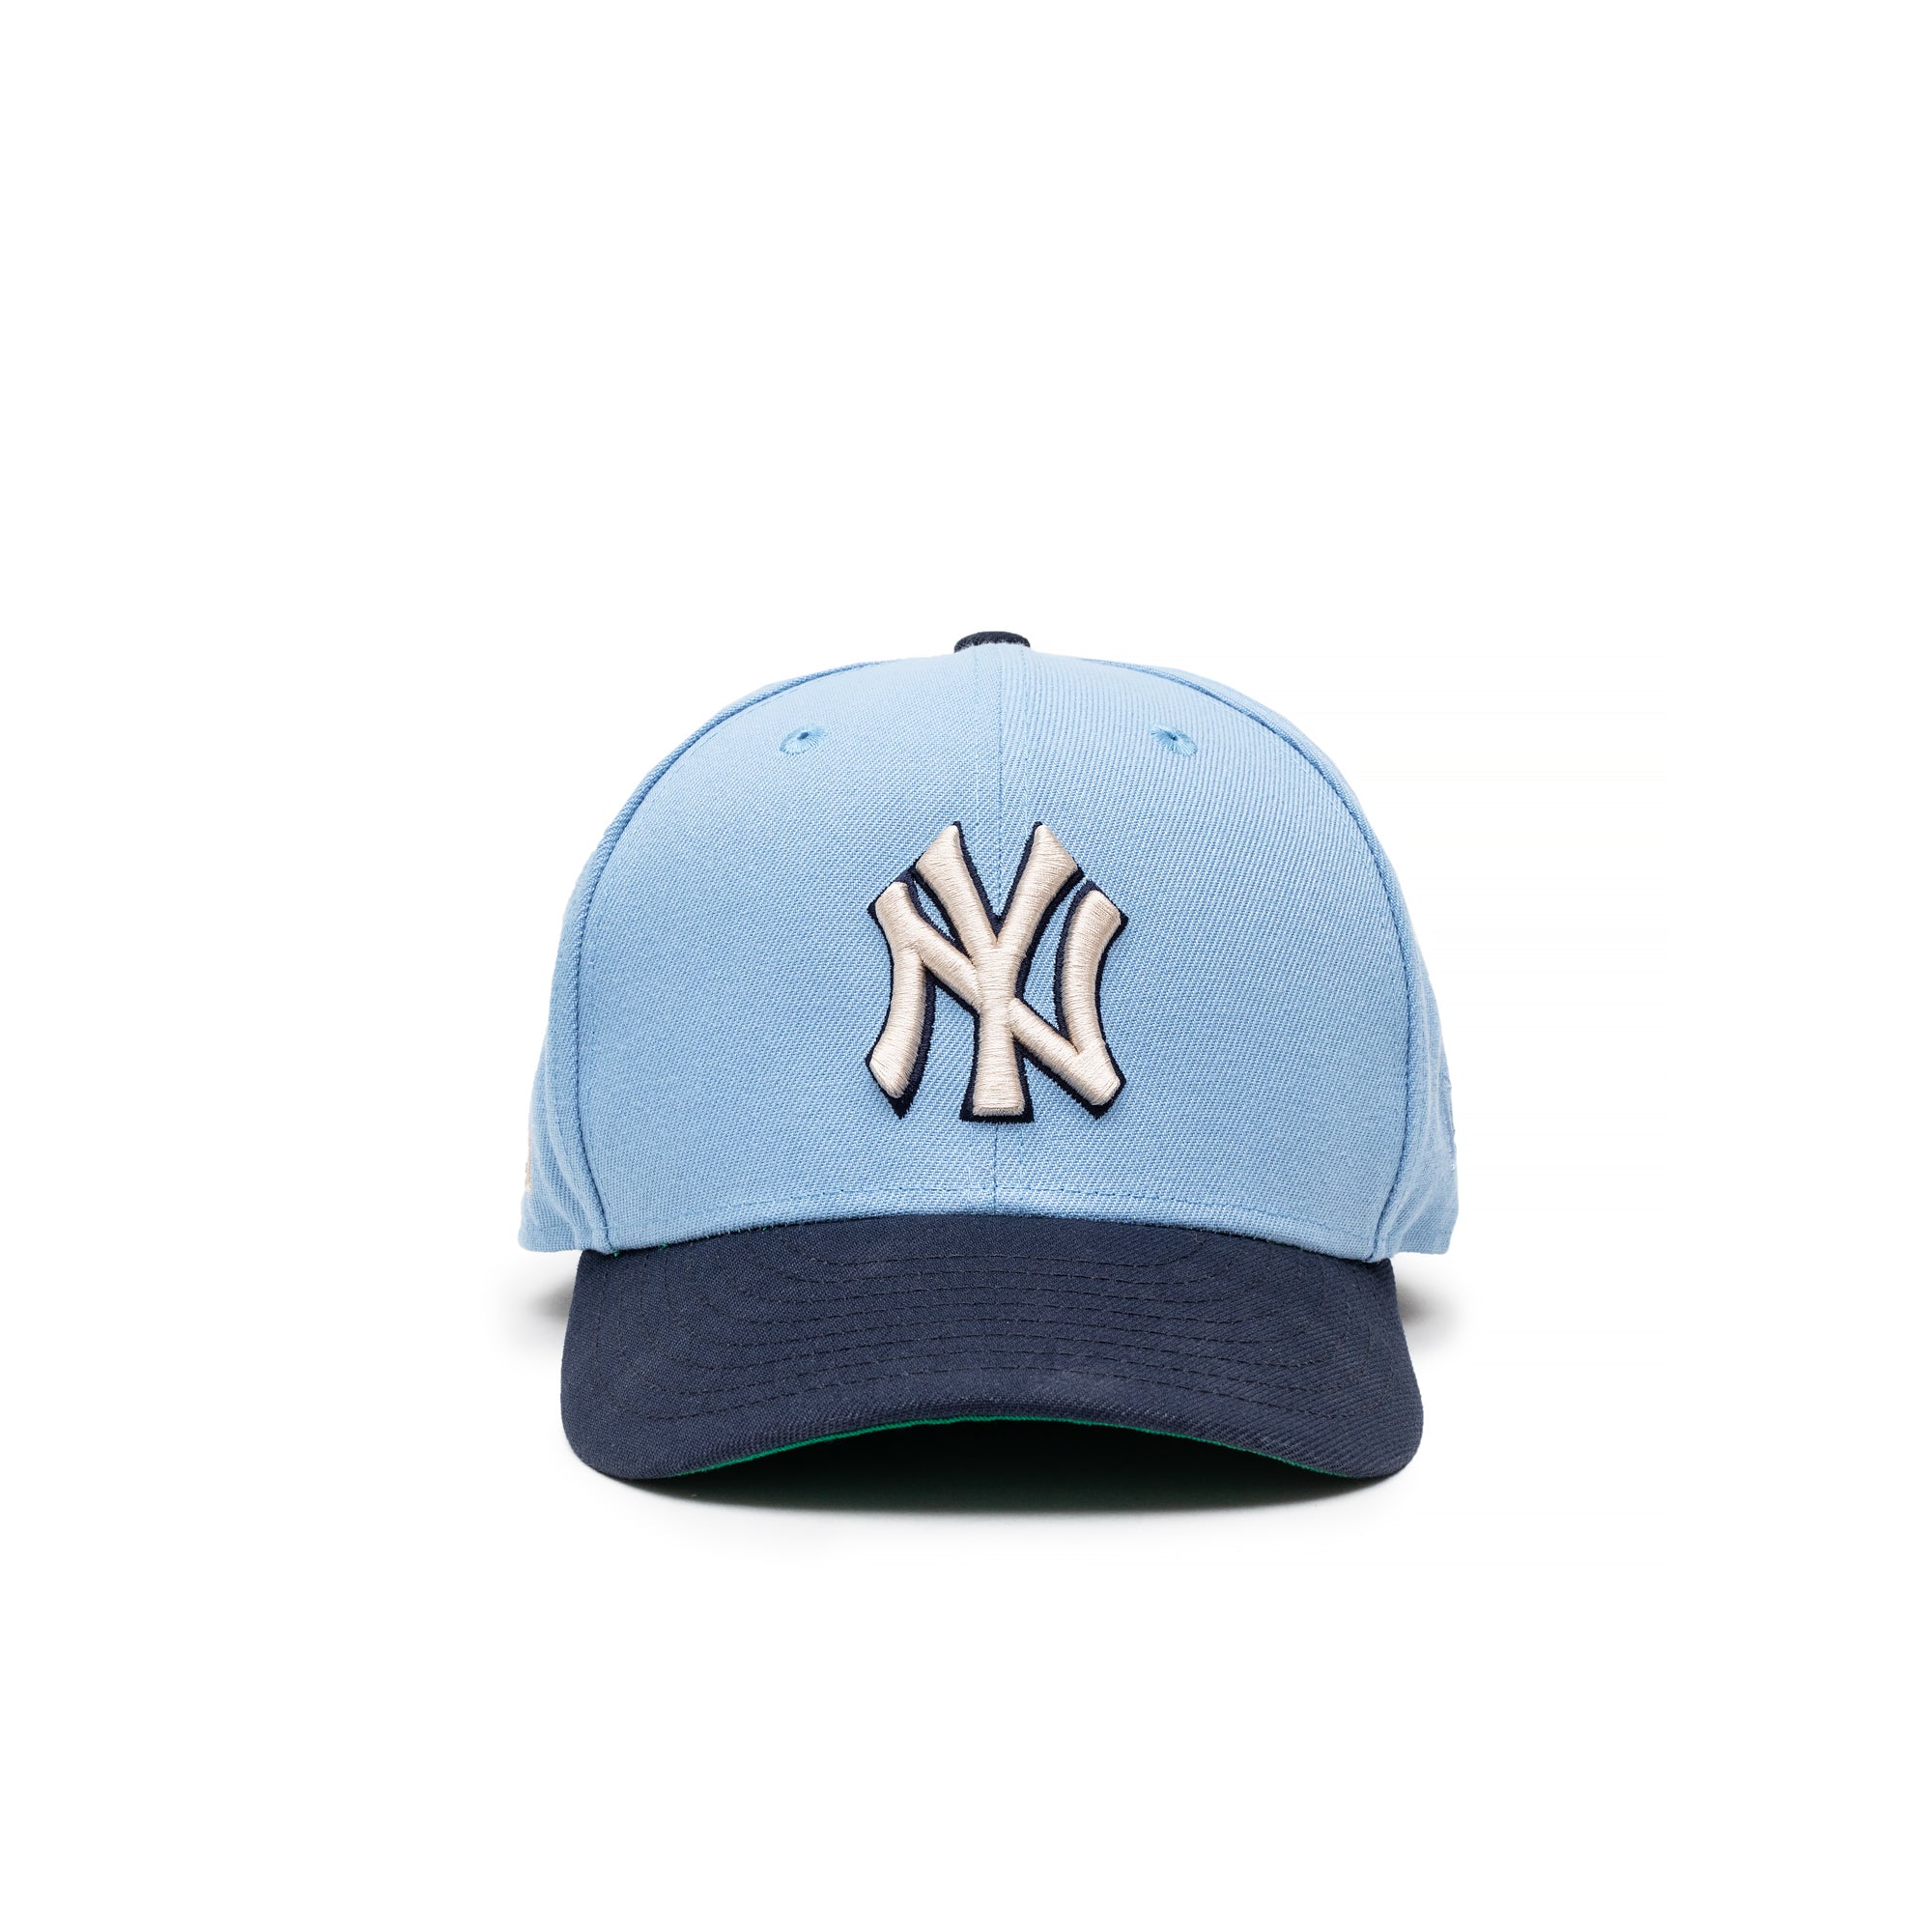 New York Yankees New Era Cap Company 59Fifty Baseball cap